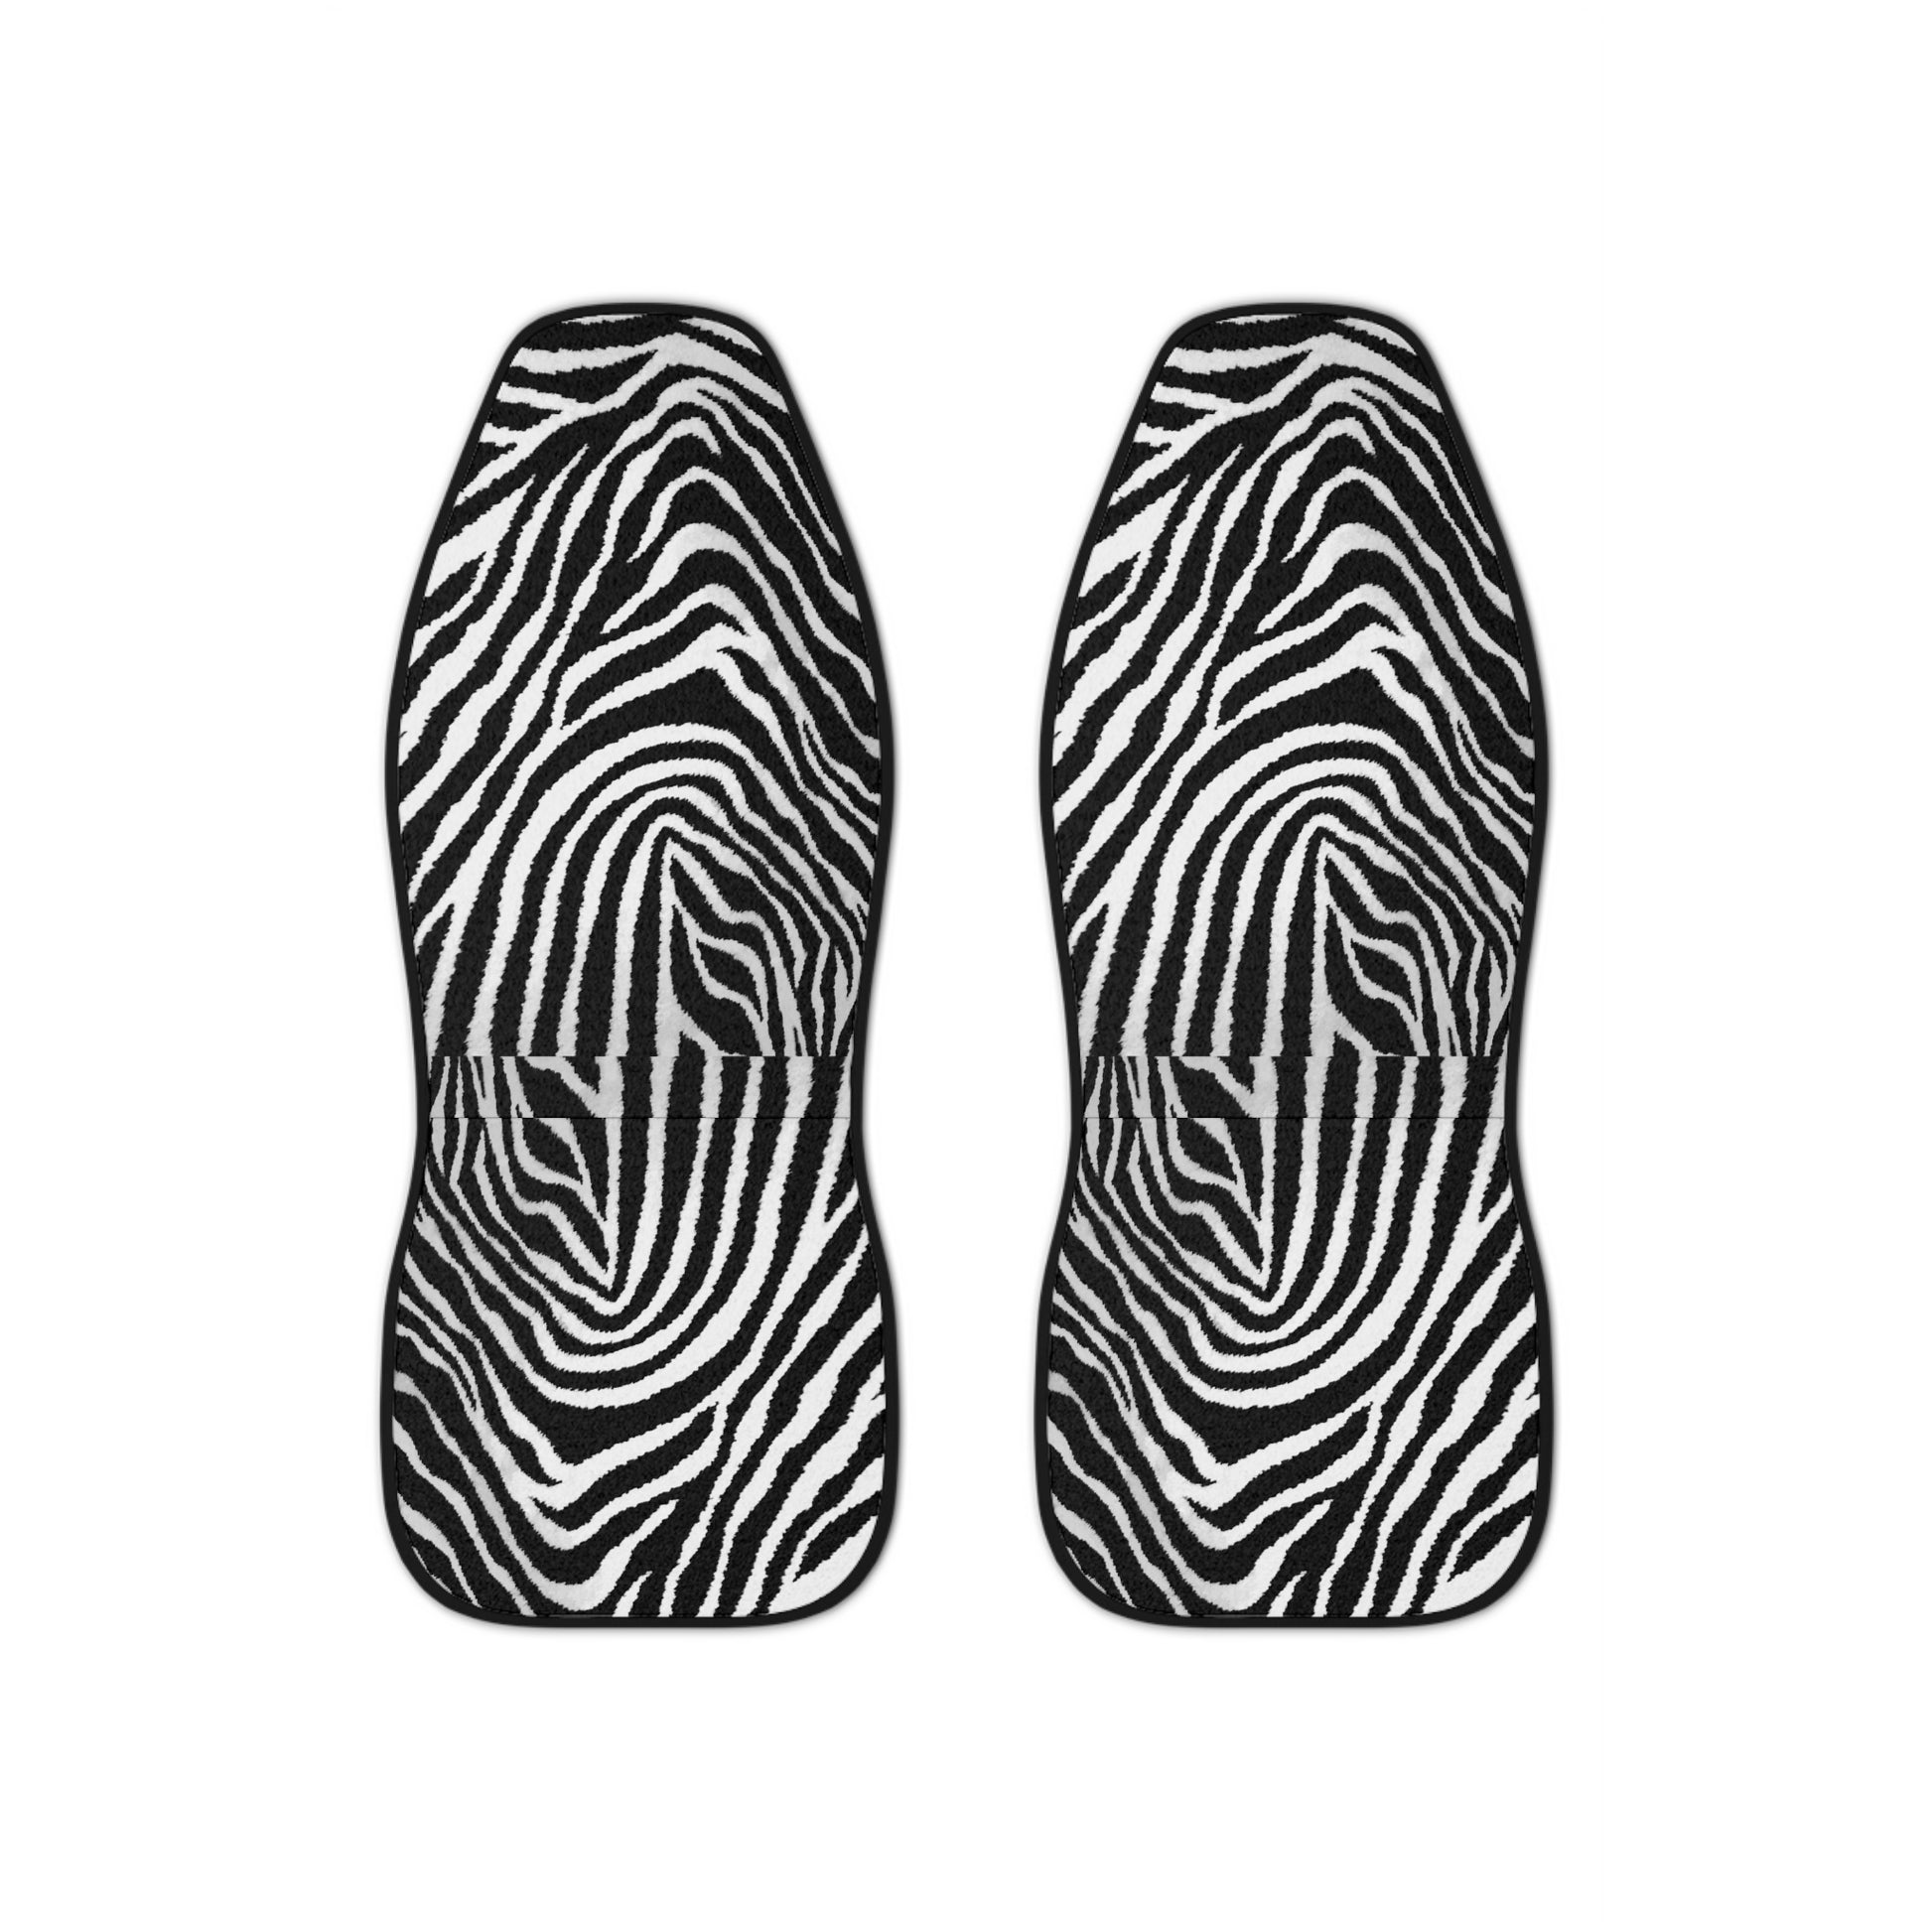 Zebra Animal Print Car Seat Cover